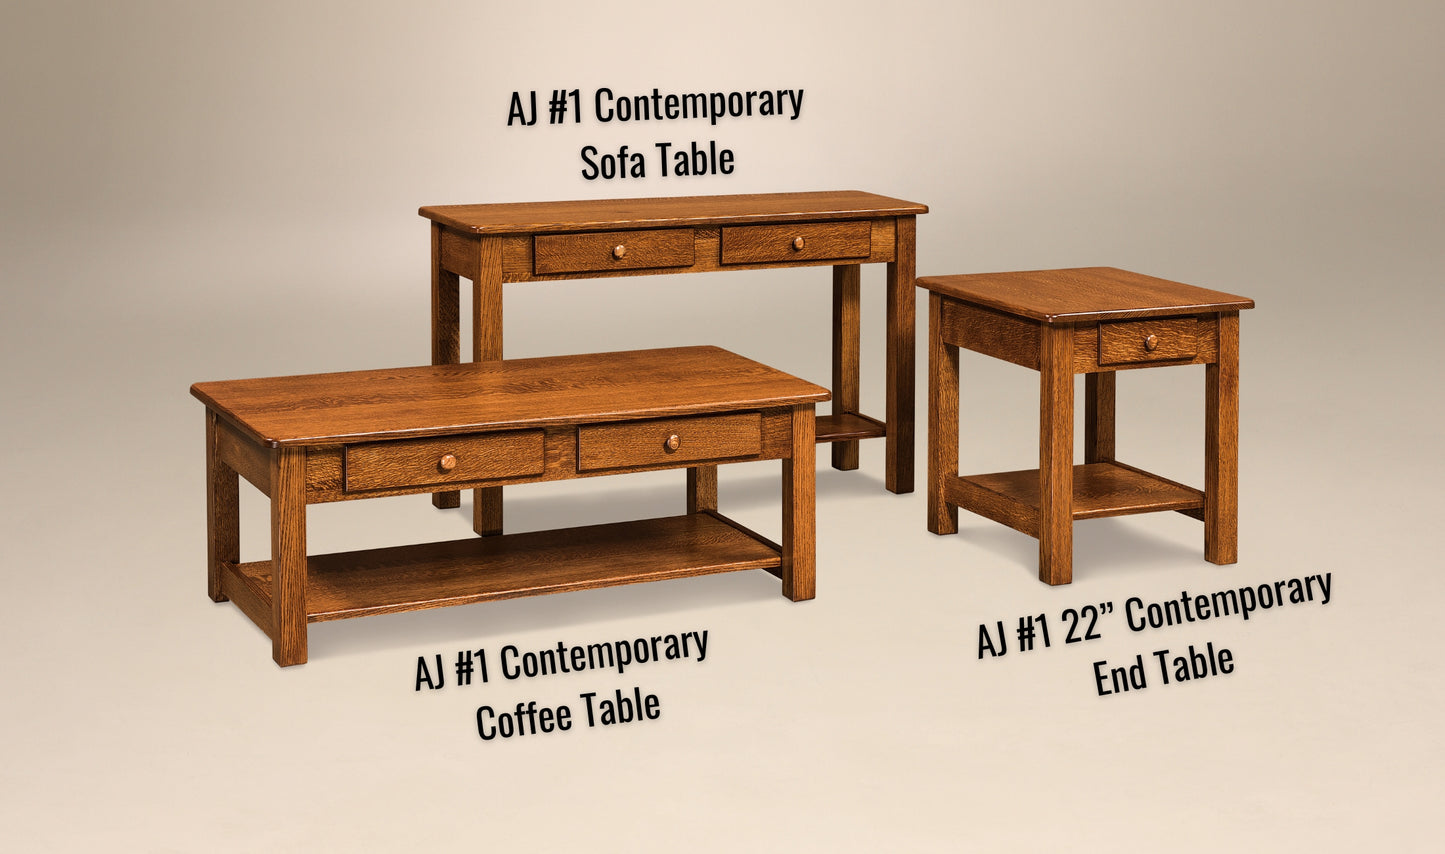 AJ #1 22" Contemporary End Table